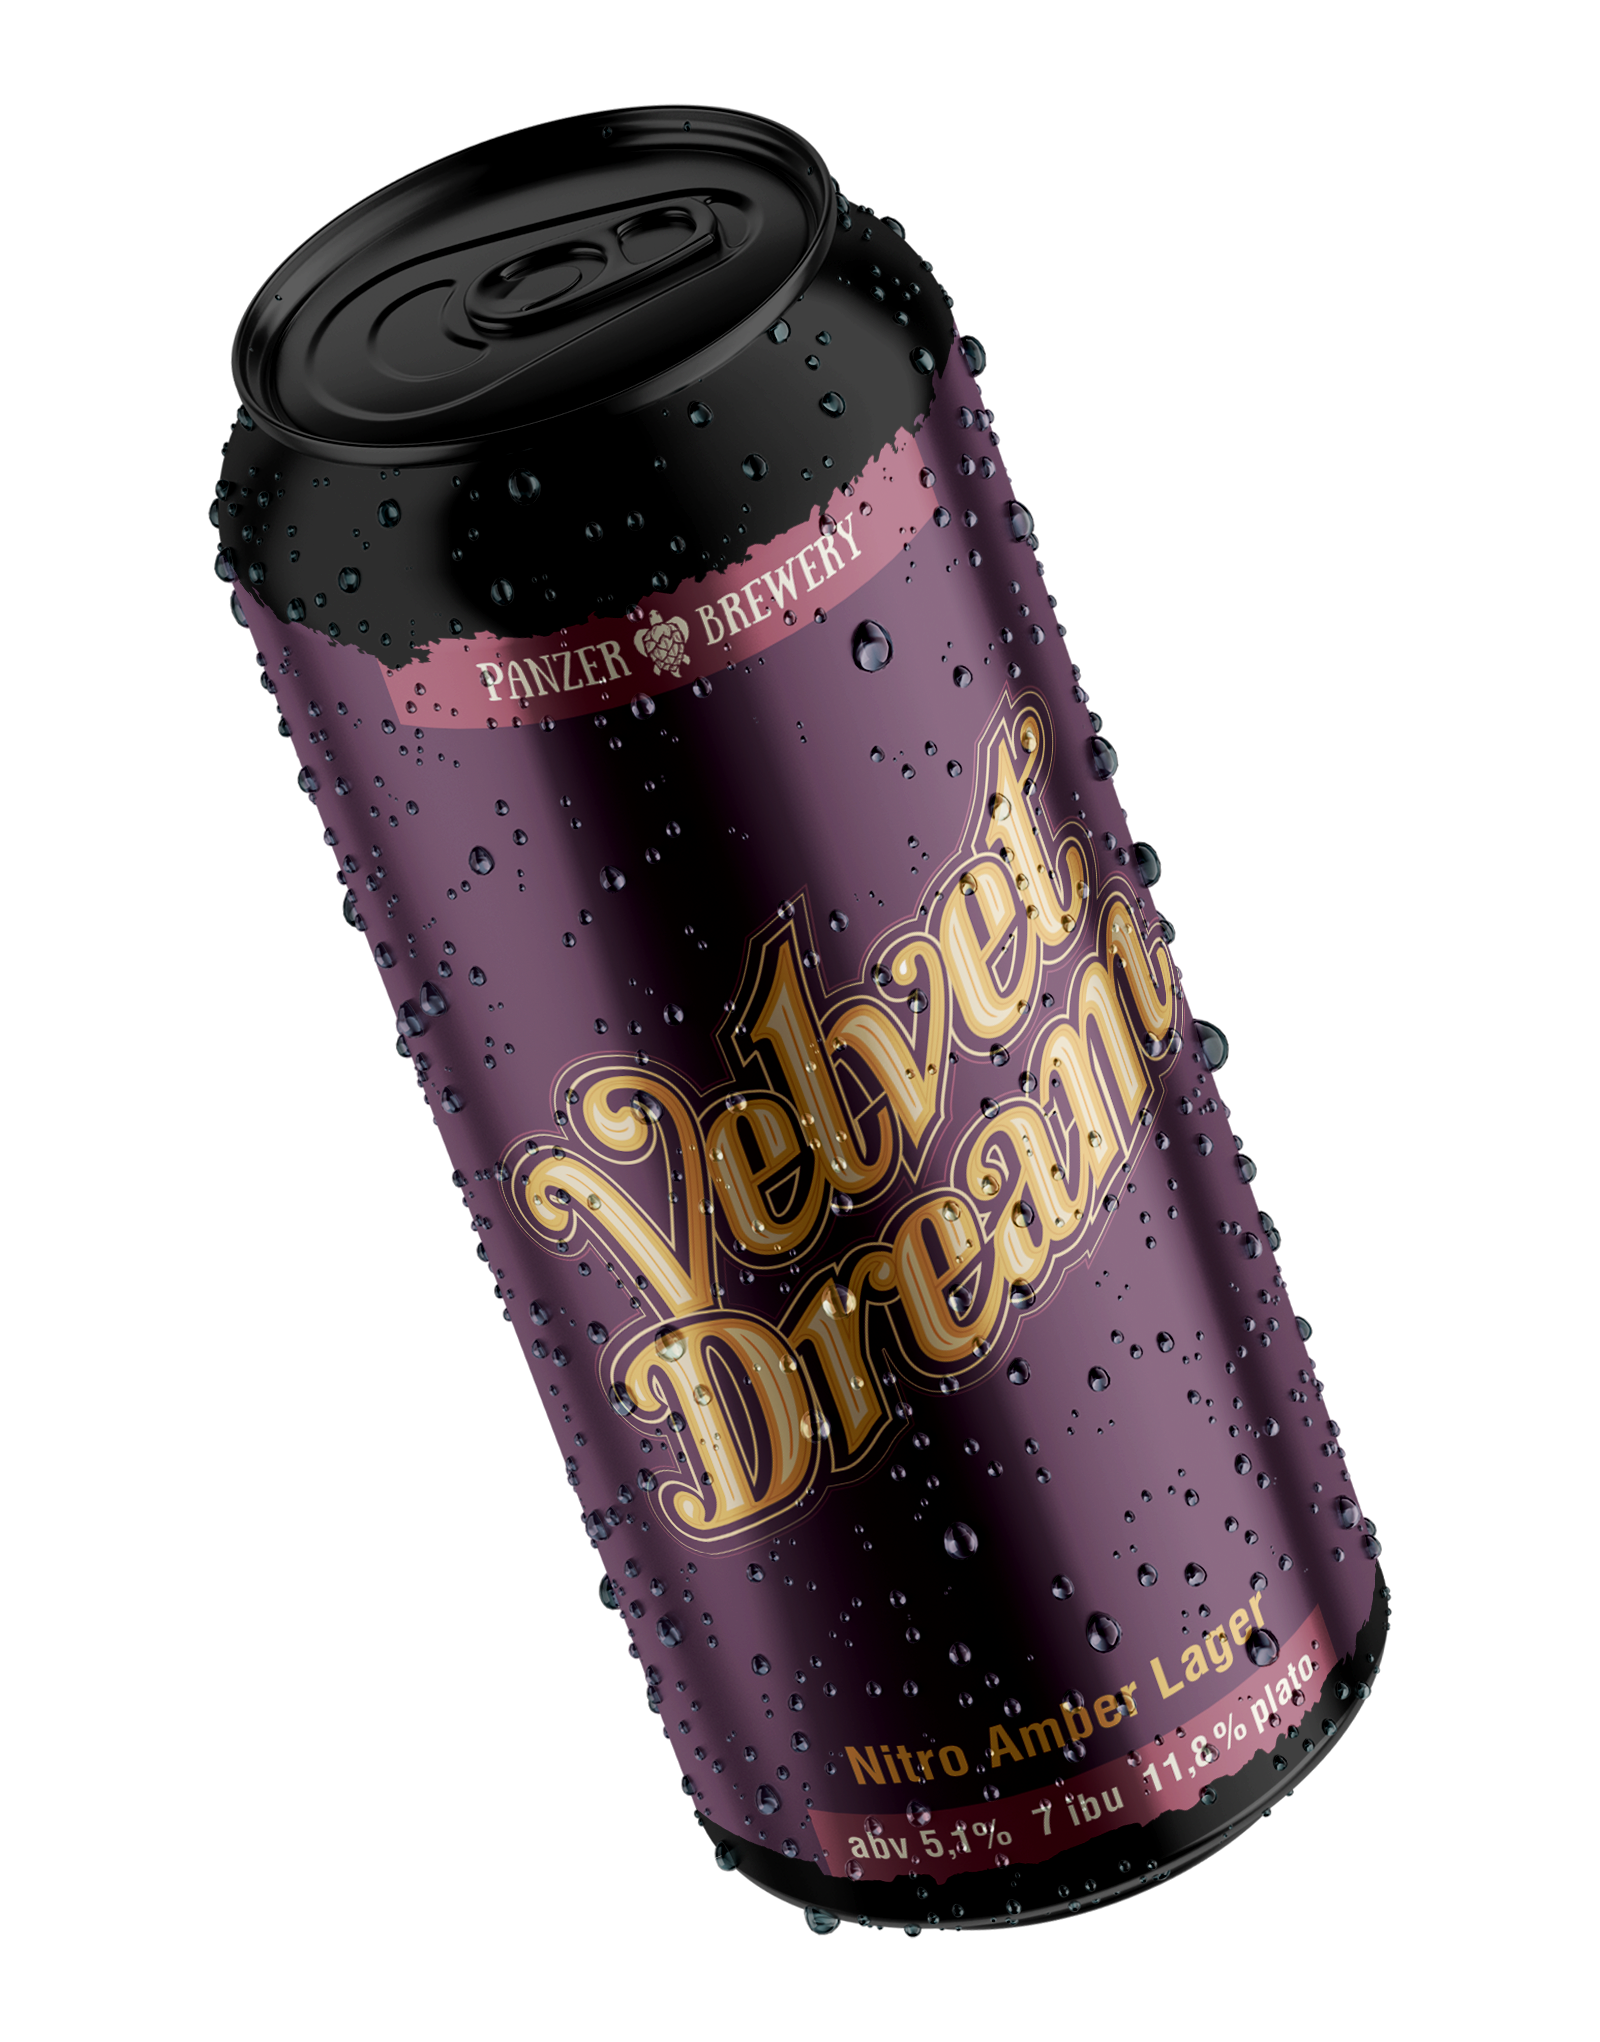 Банка пива Velvet Dream - Amber Lager от Panzer Brewery